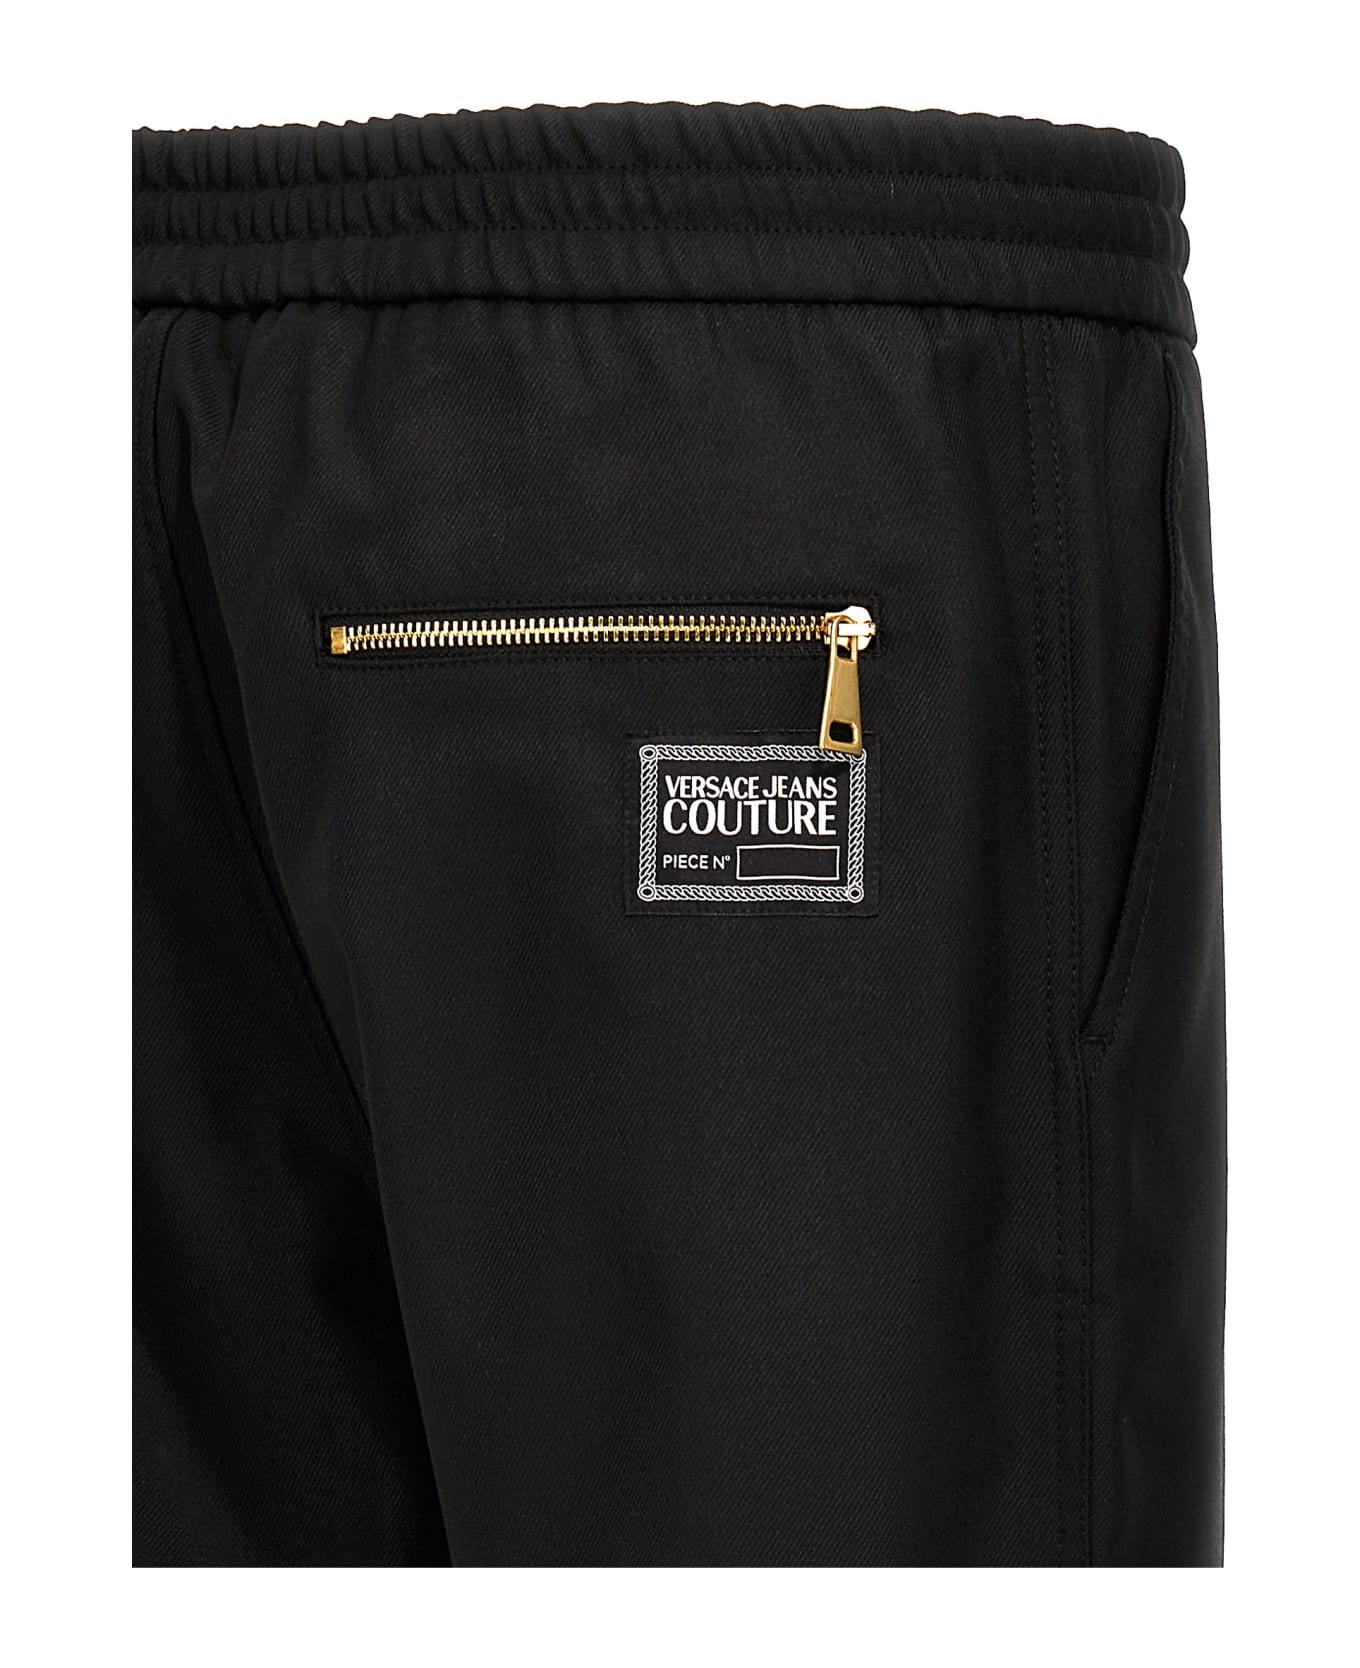 Versace Jeans Couture Tailoring Jogger Pants - Black